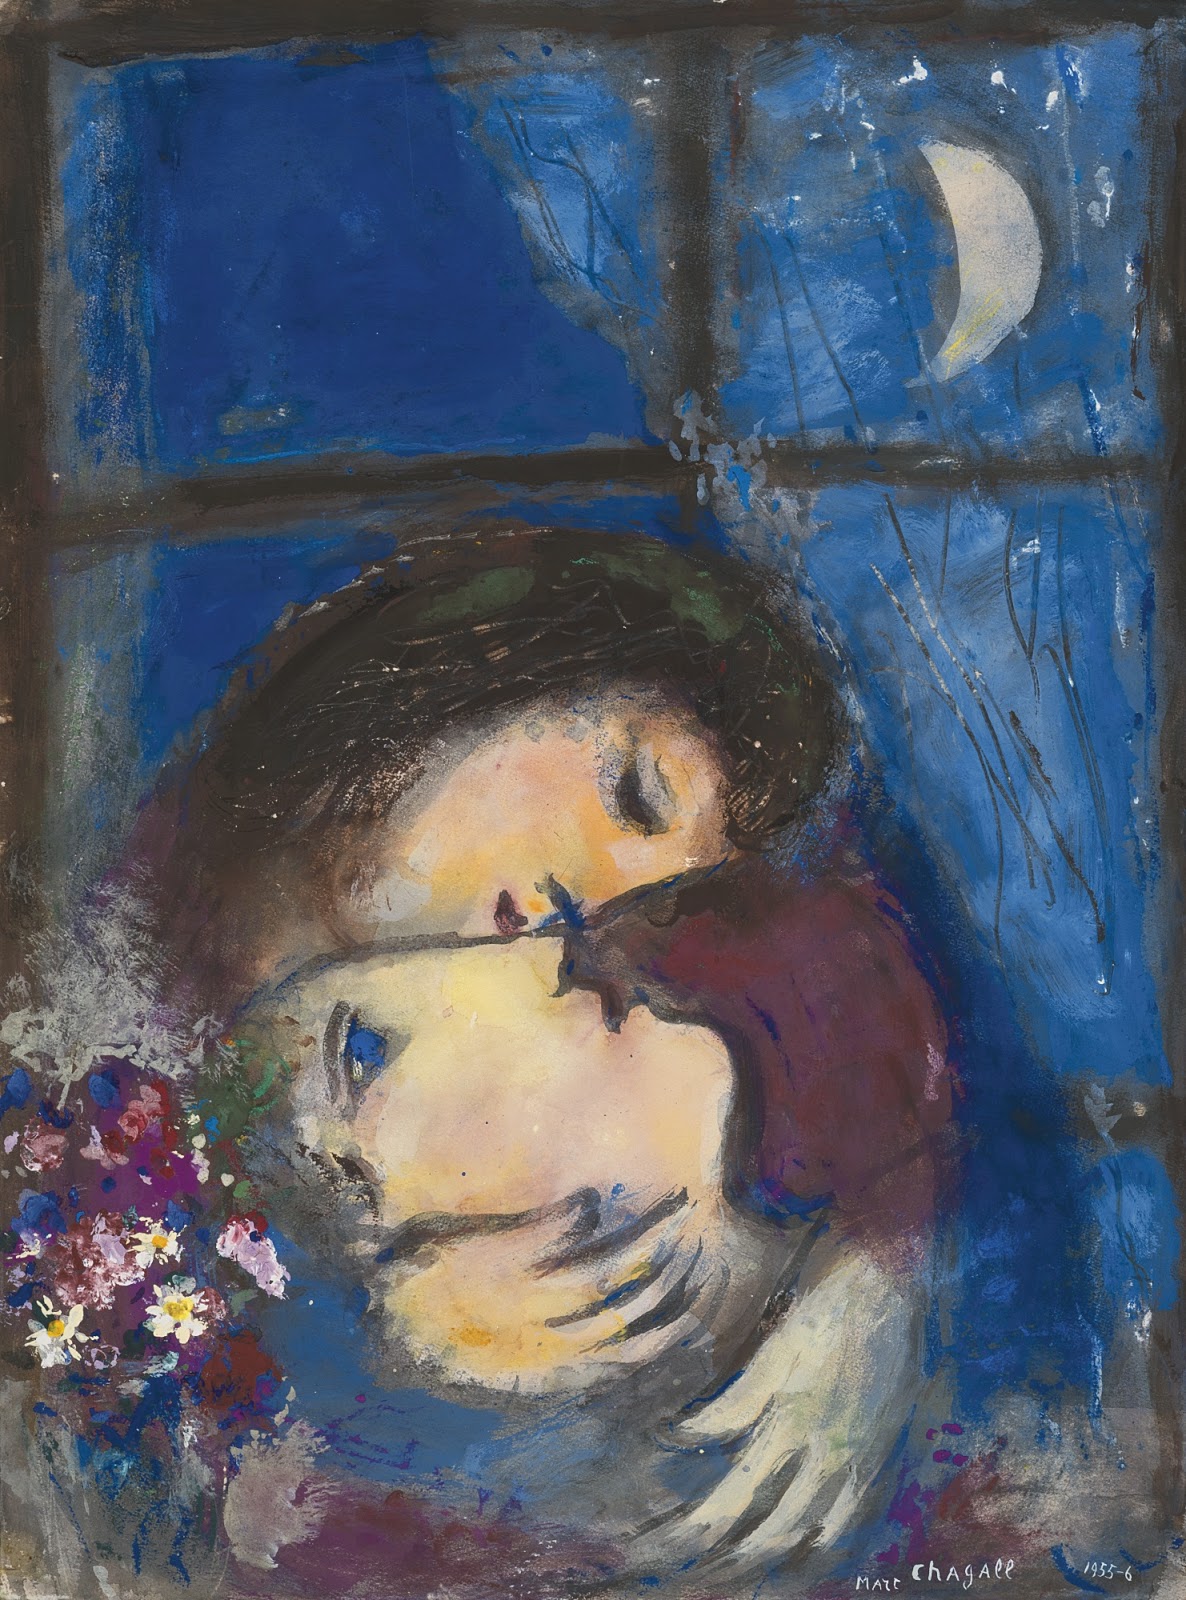 Marc+Chagall-1887-1985 (76).jpg